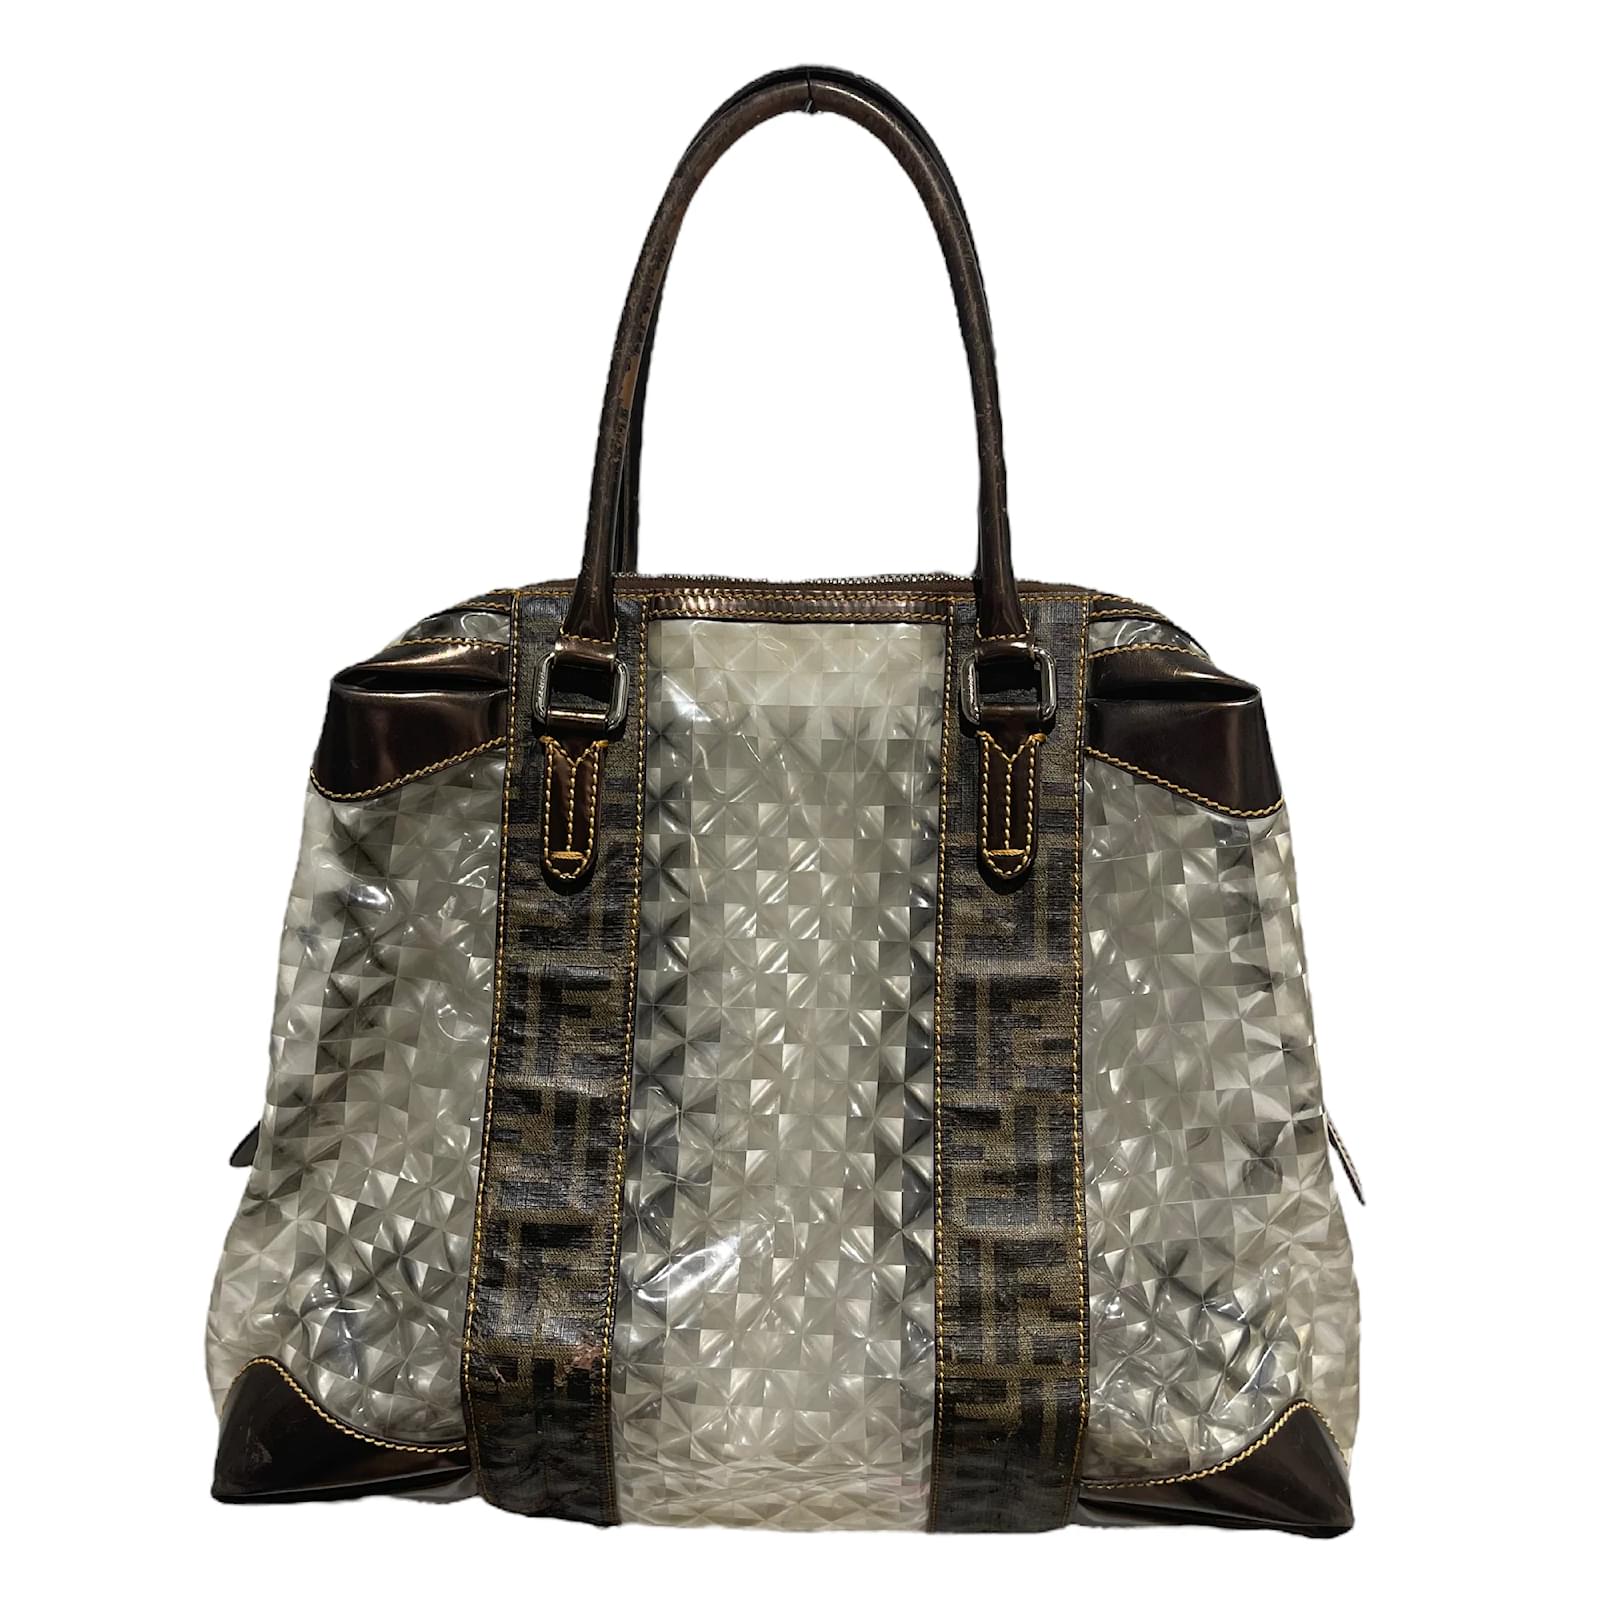 Saint Laurent | Bags, Fashion bags, Women handbags